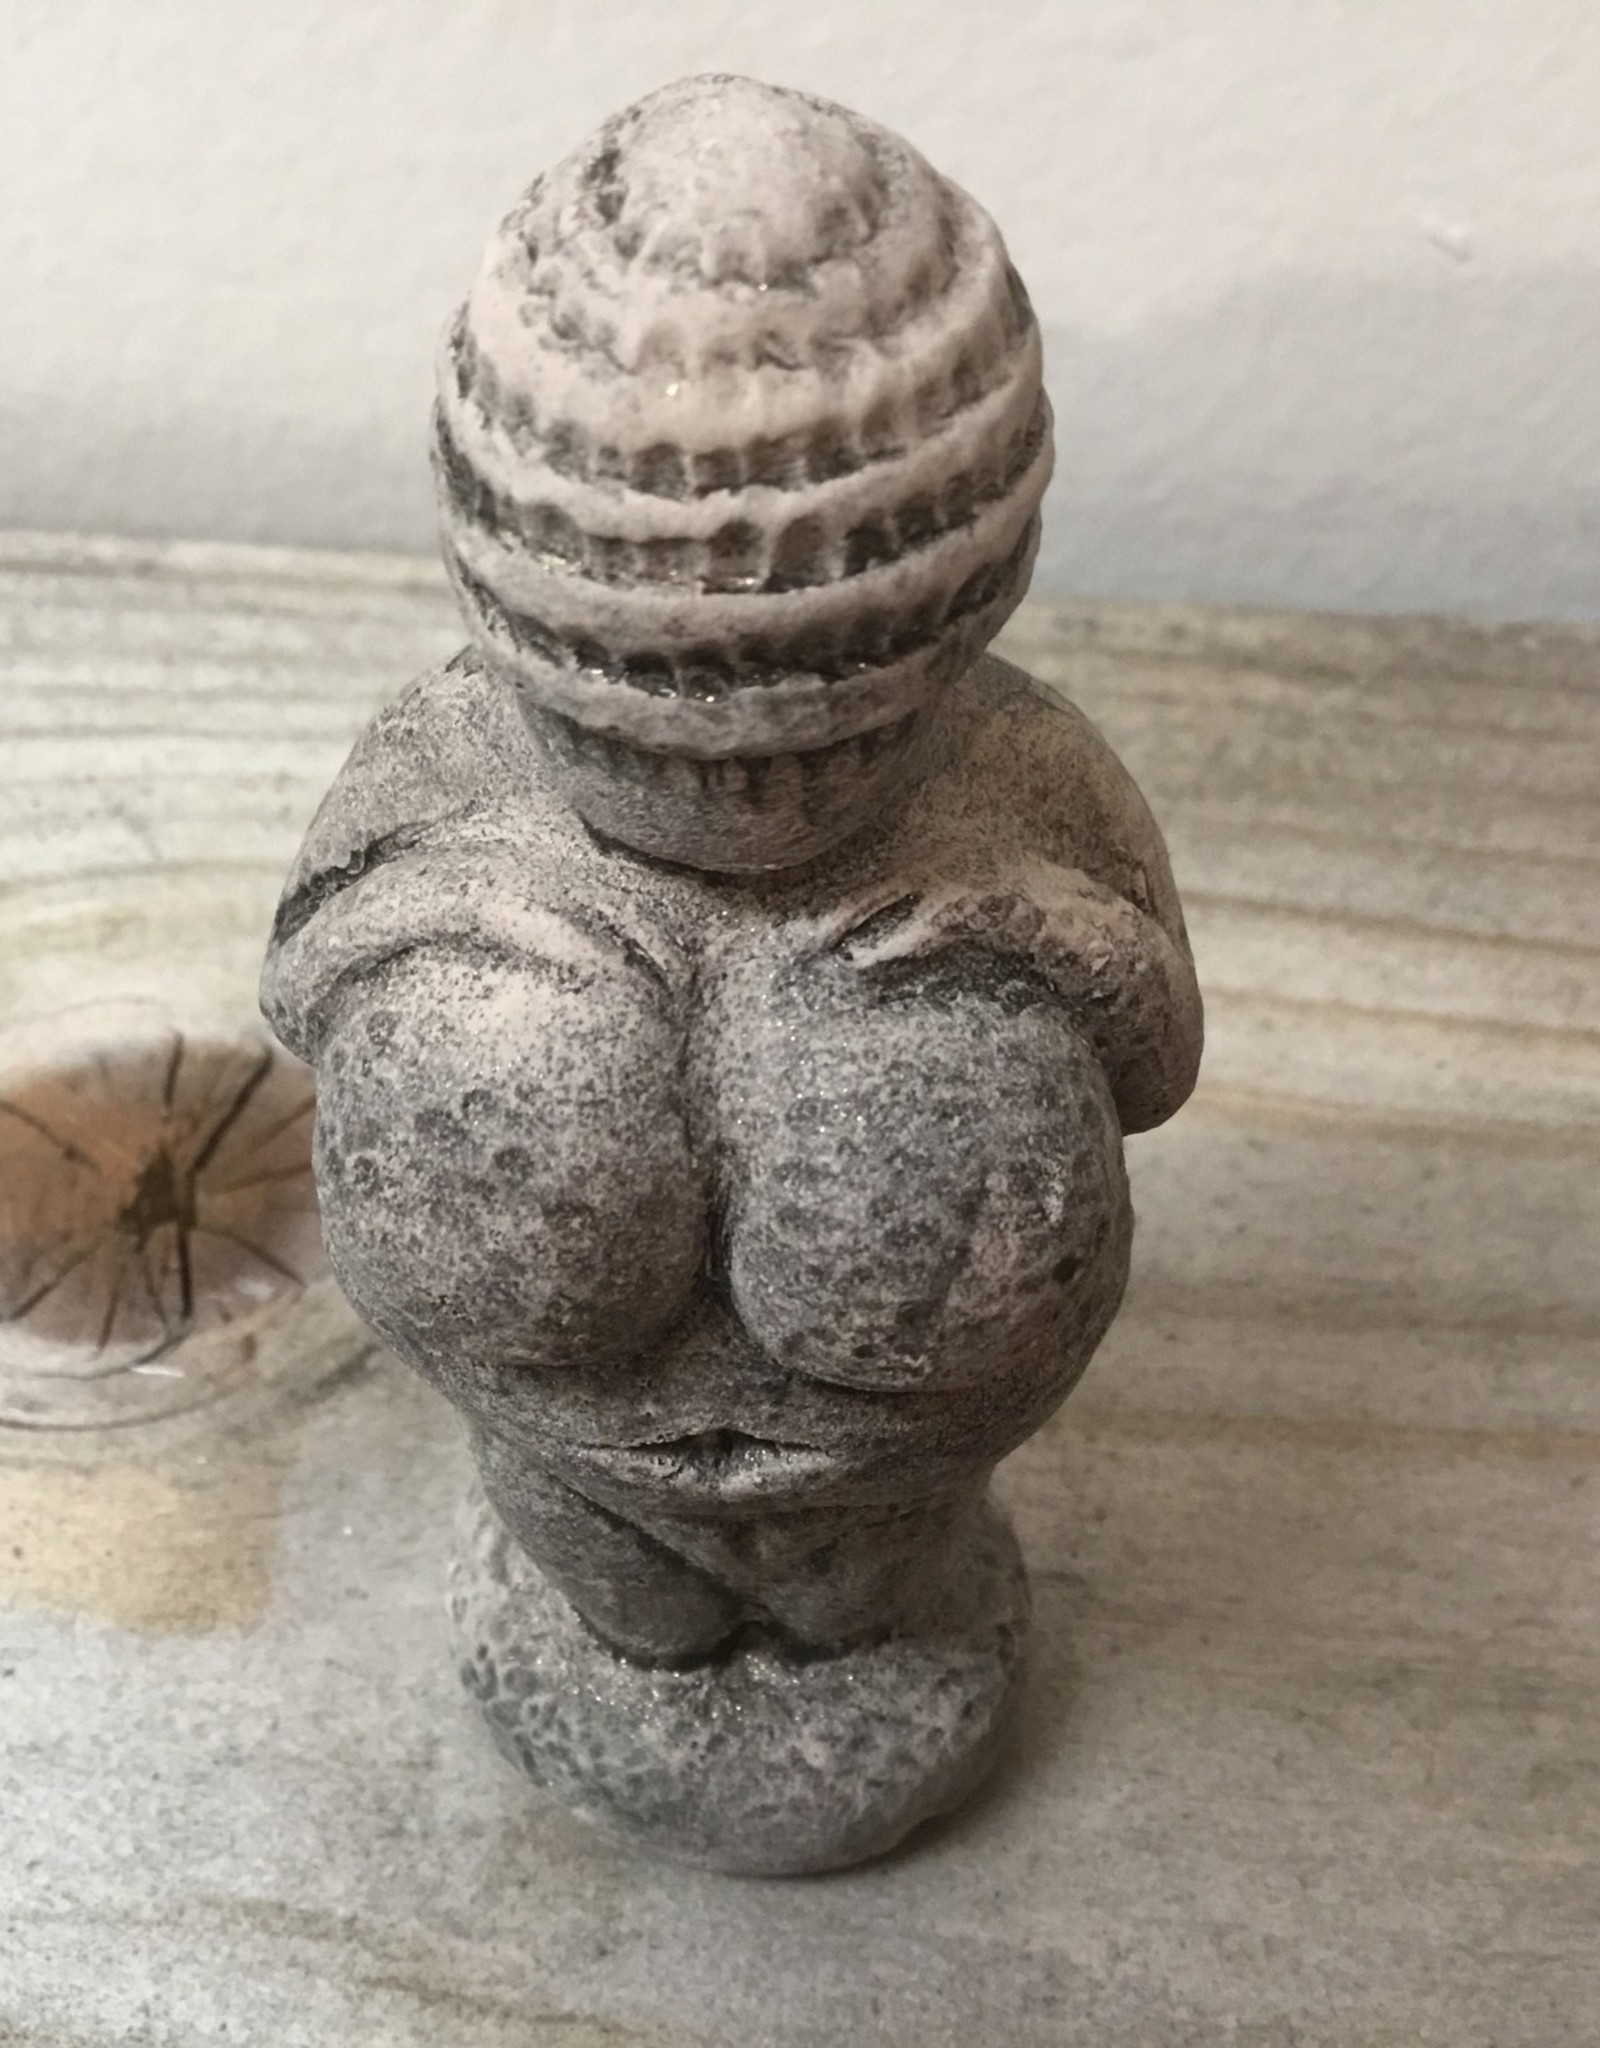 Gypsum Goddess Venus of Willendorf 3.5"